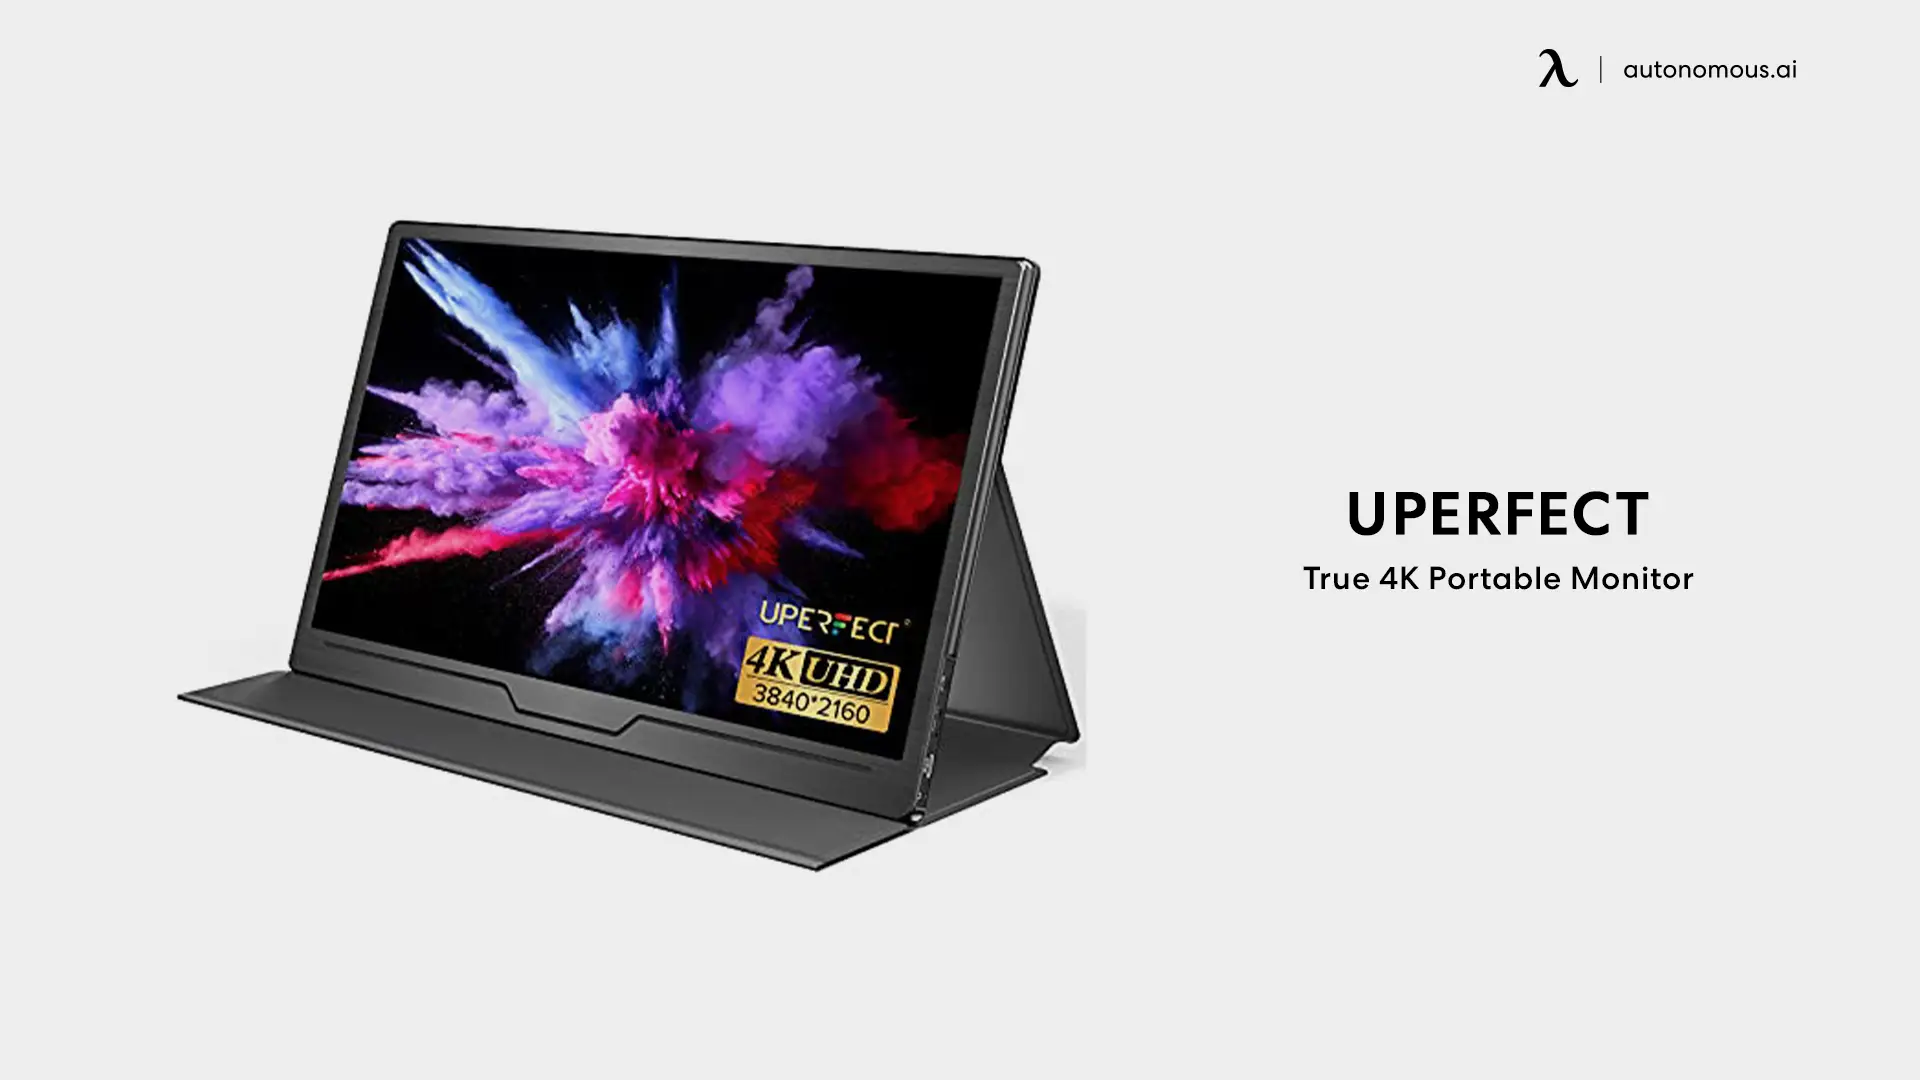 UPerfect True 4K Portable Monitor